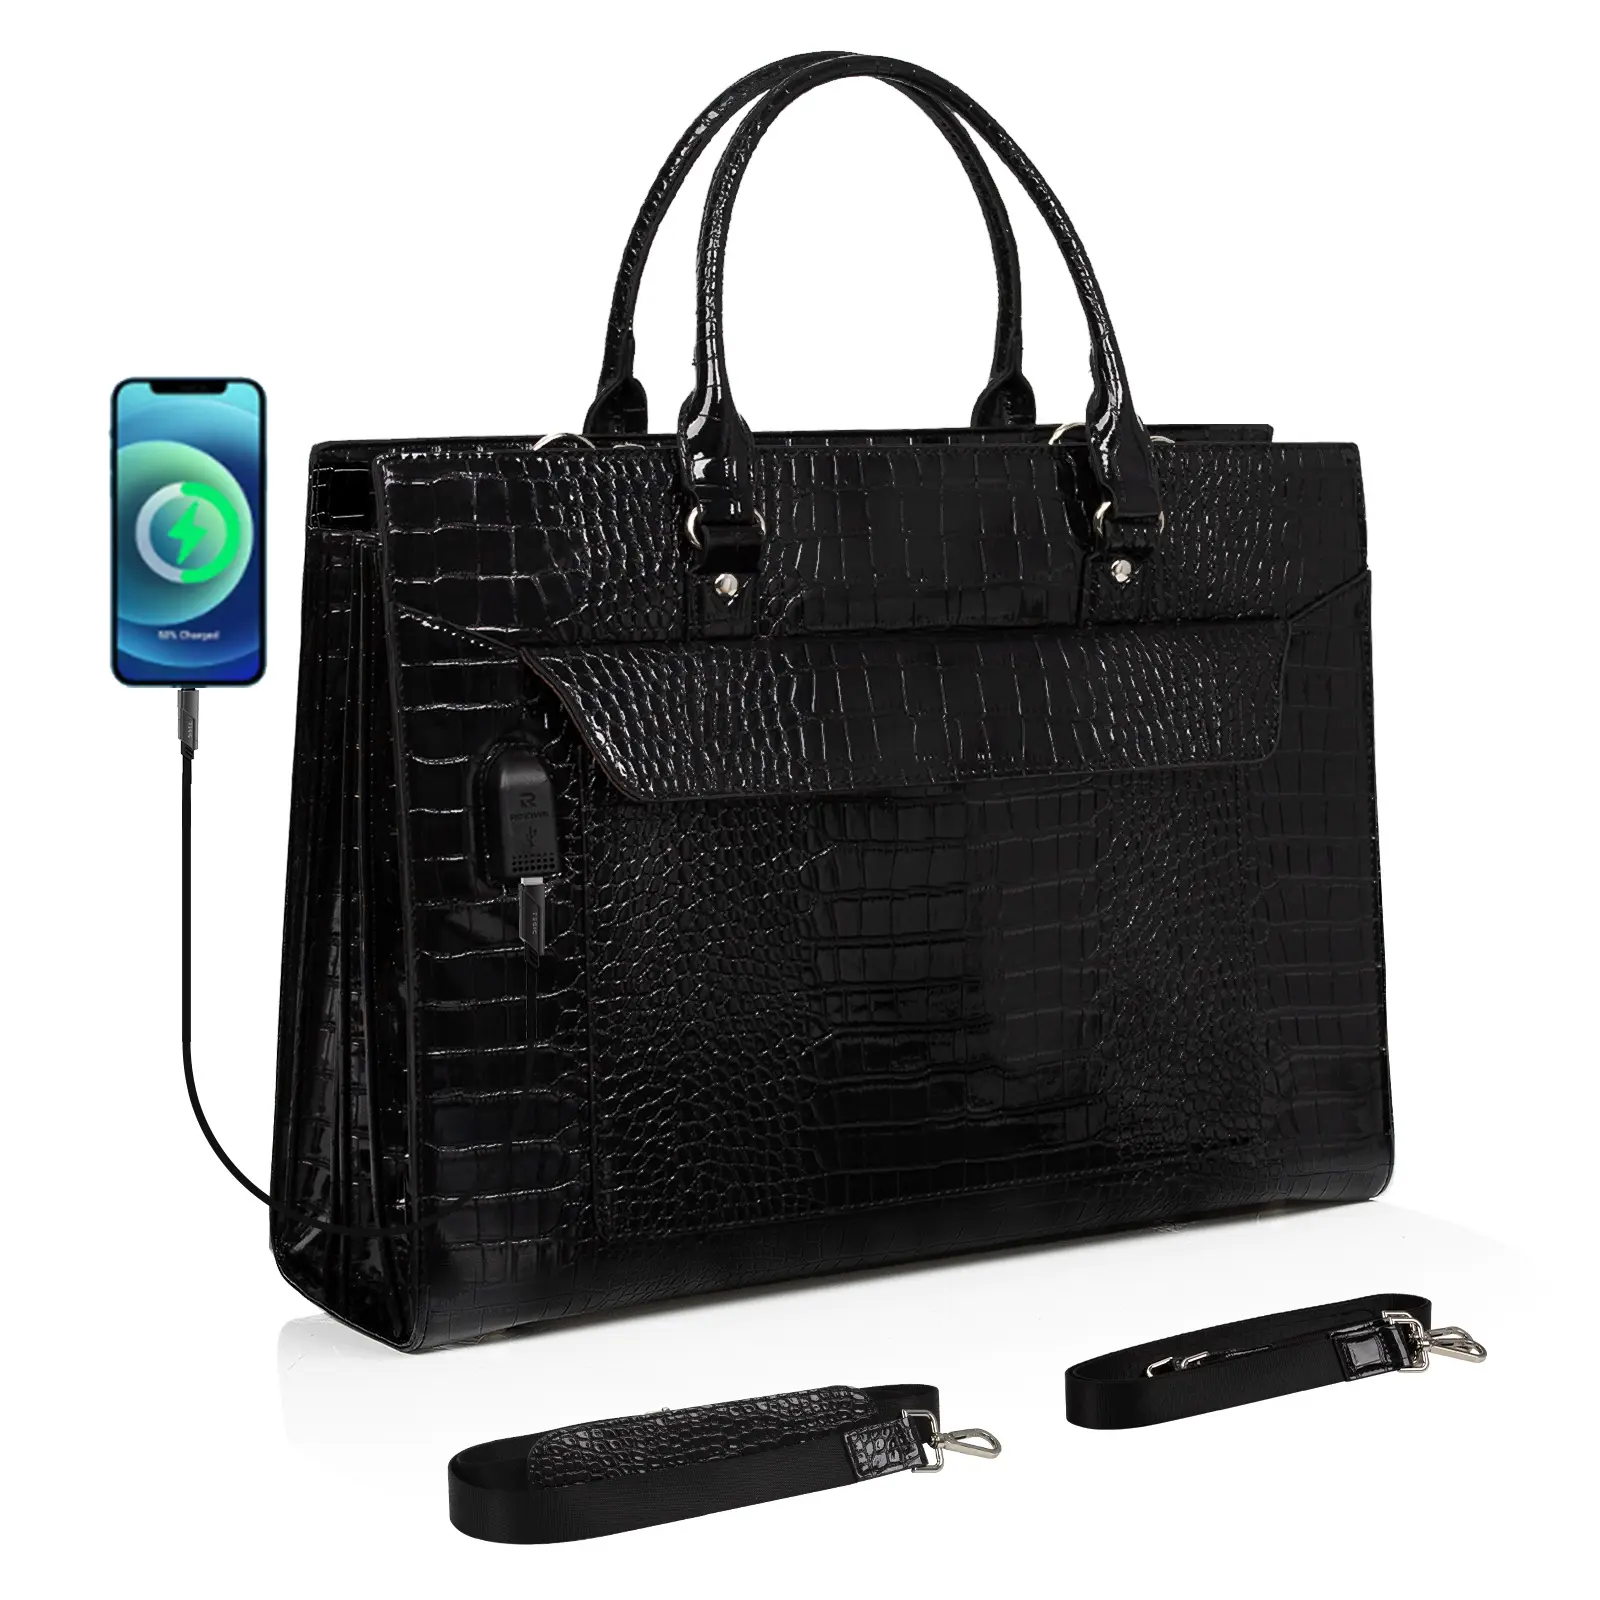 Relavel Waterproof Leather Teacher Handbag with USB Port Large Capacity Bag Laptop Bag for Women and Men 17 Inch Laptop Tote Bag